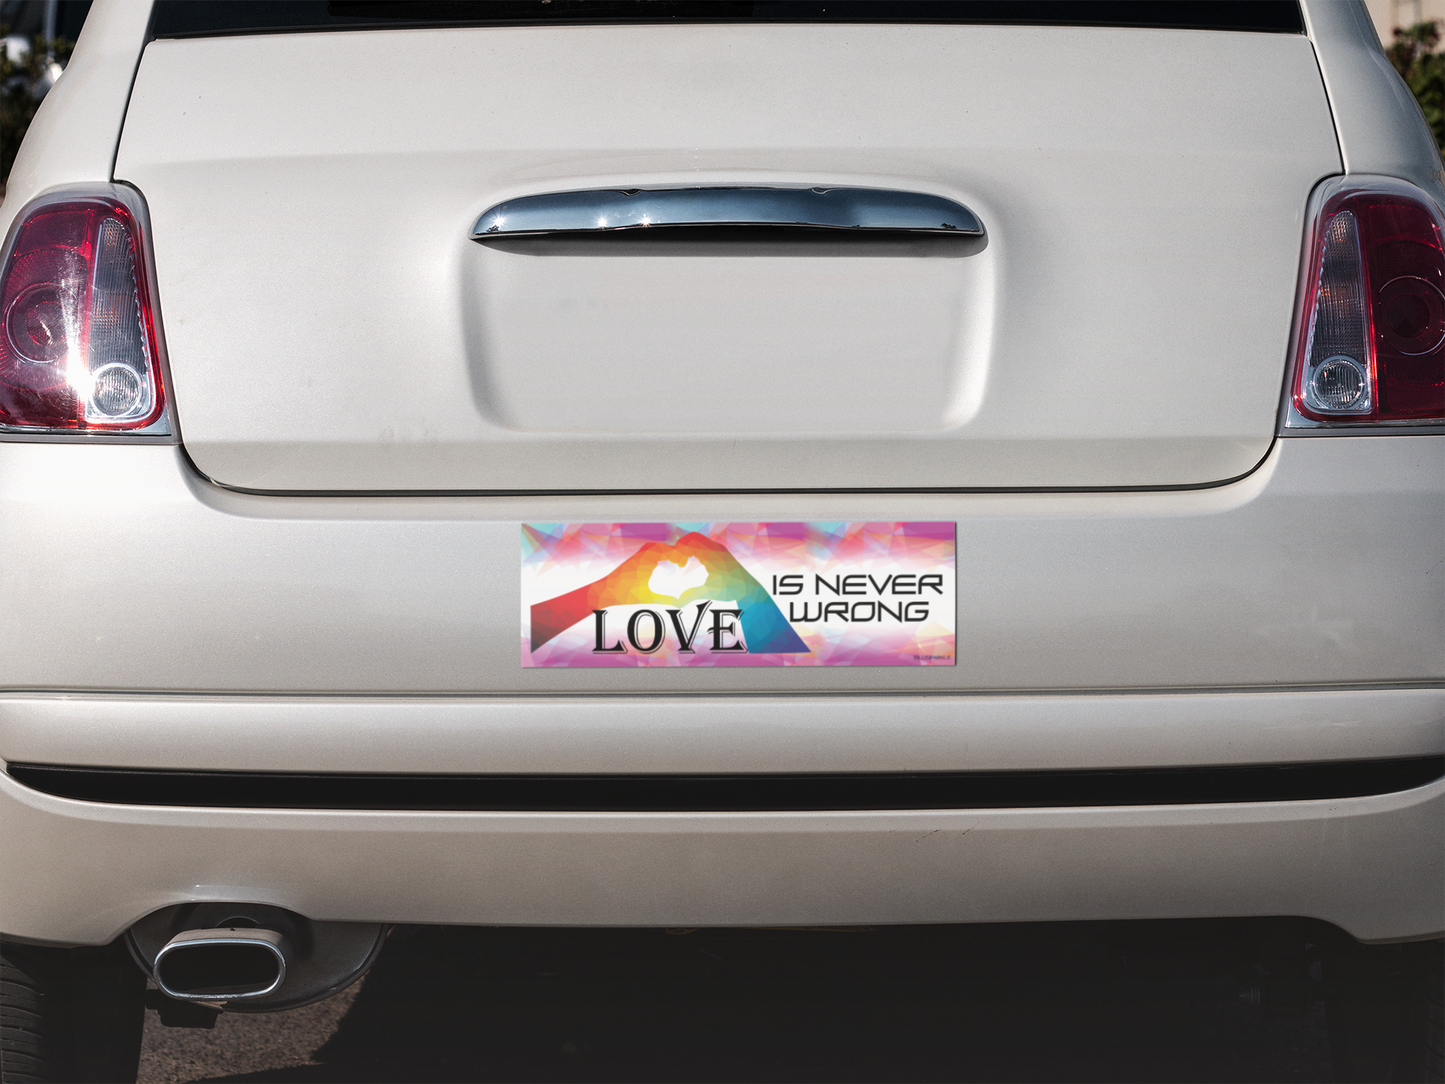 Love Is Never Wrong Bumper Sticker